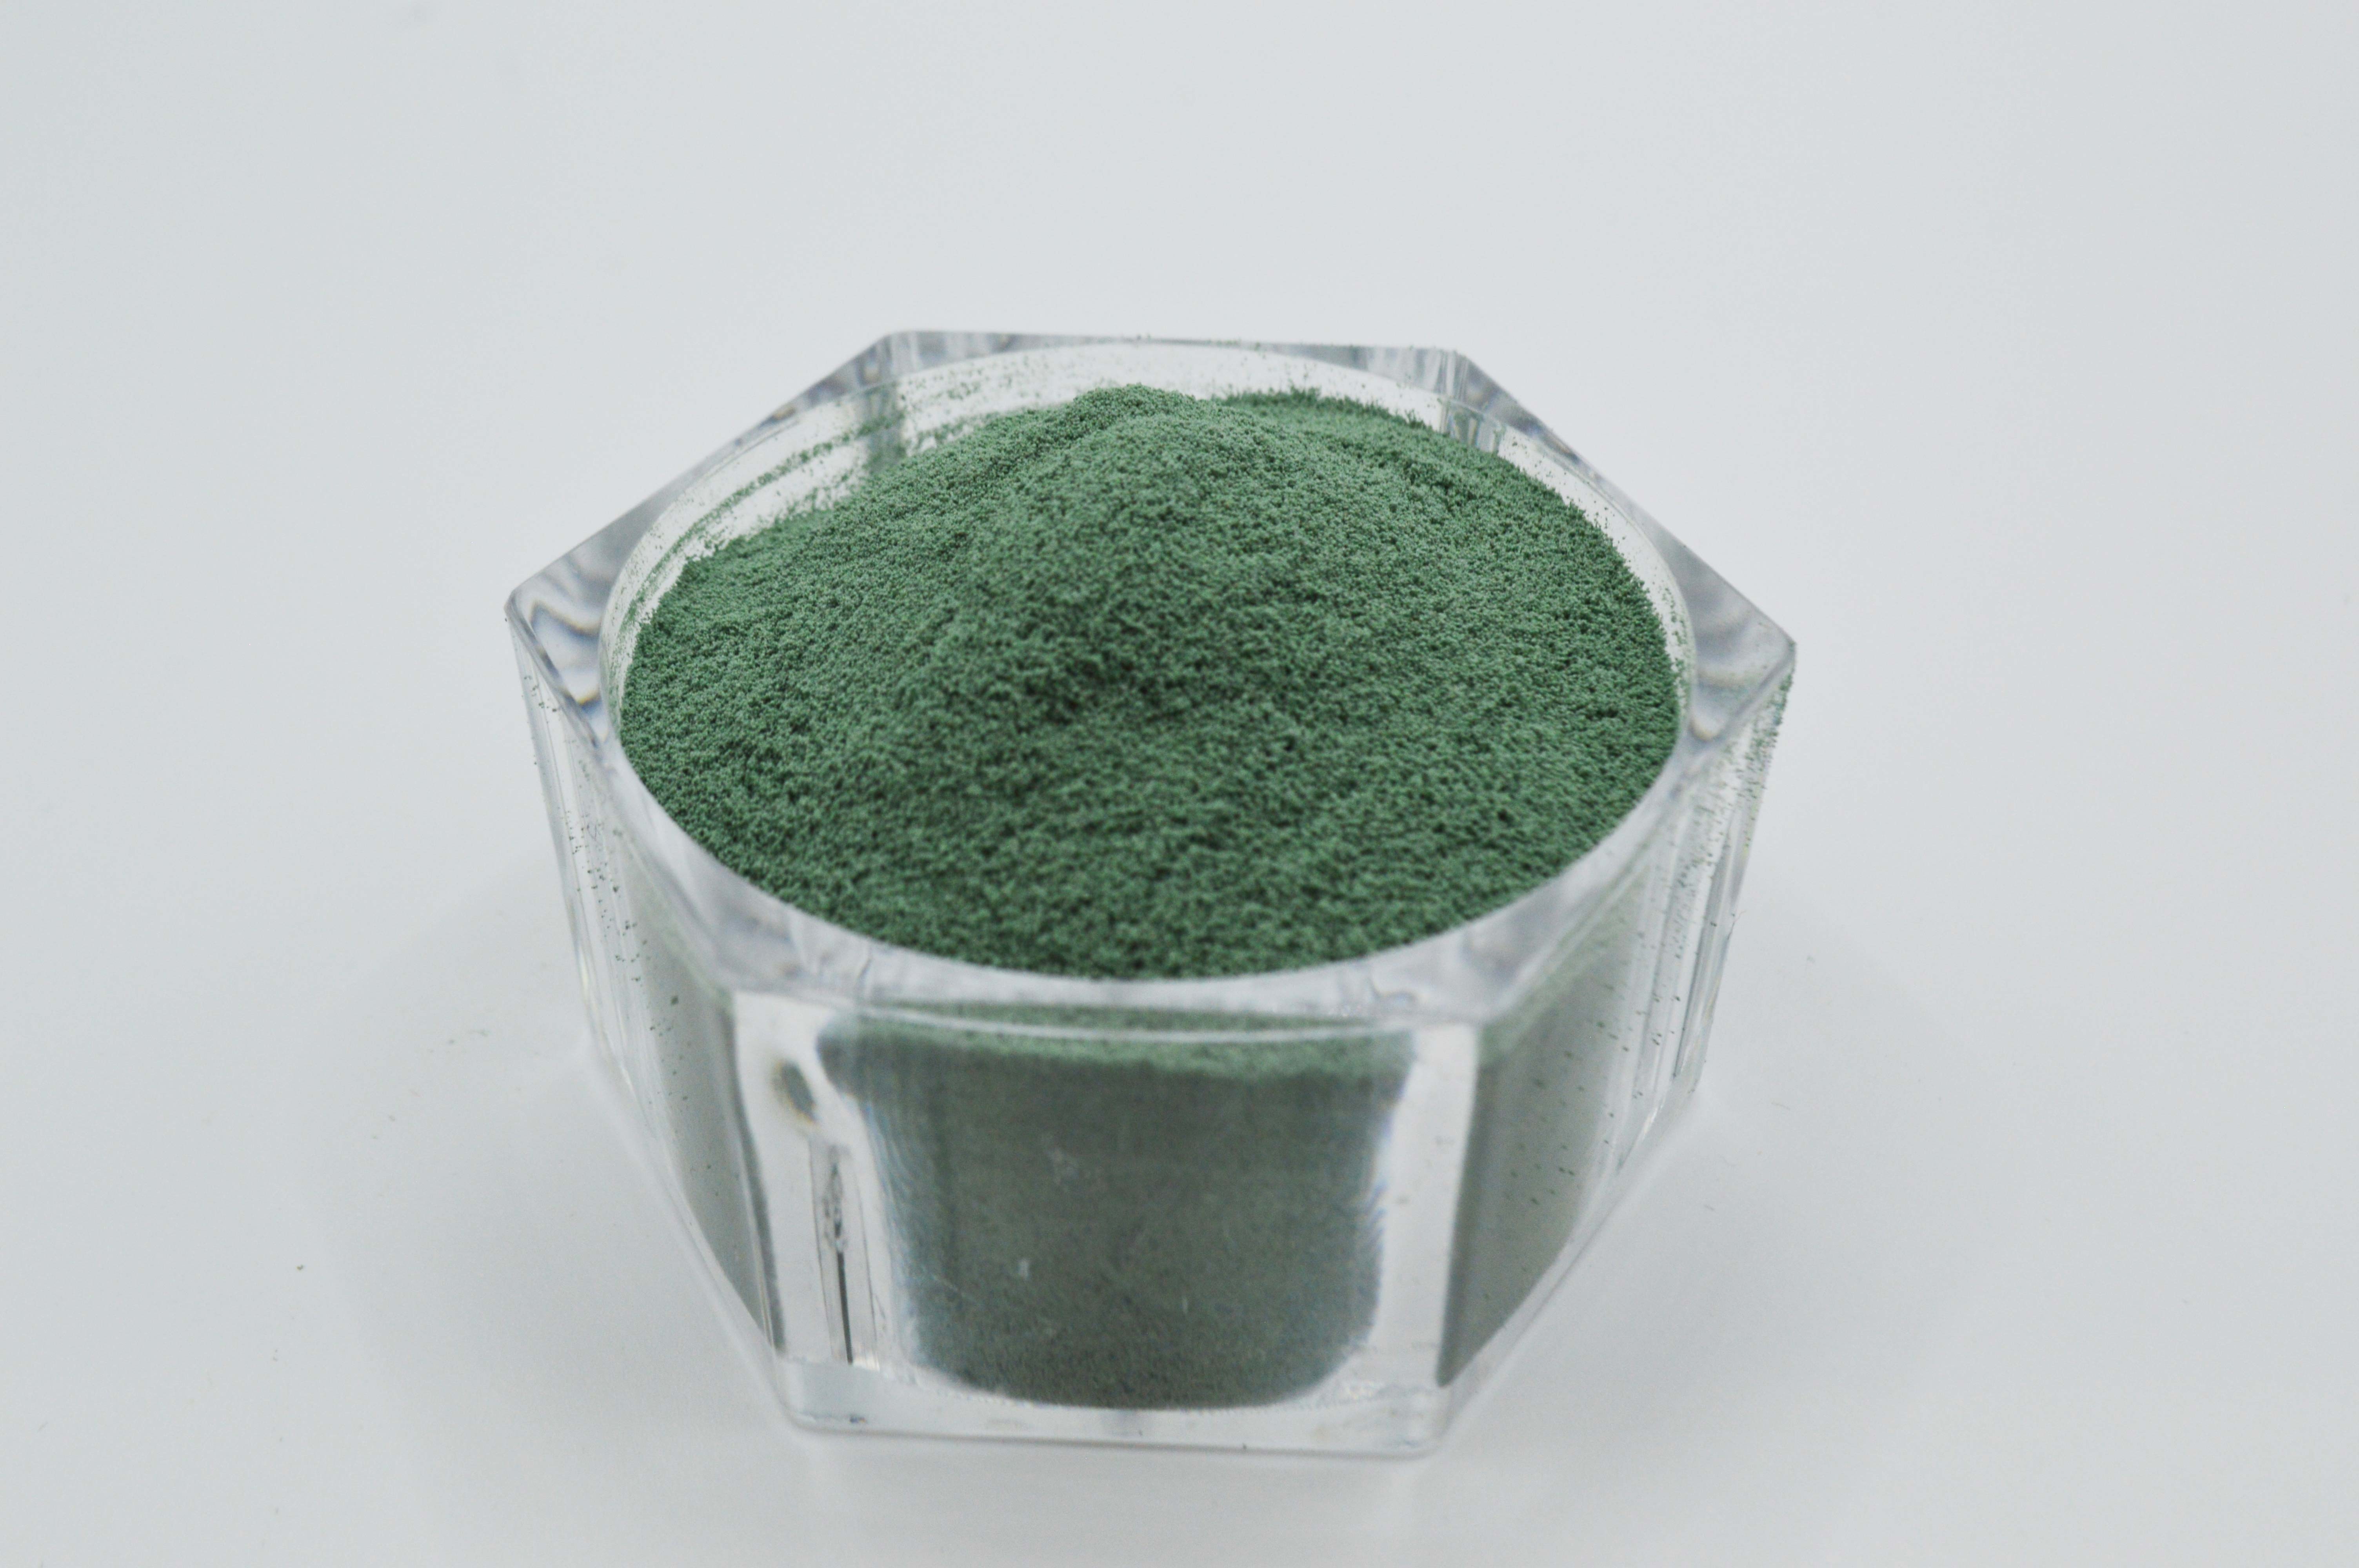  Animal Feed Additive Amino Acid Protein Chromium Green Powder CAS 7440-47-3 Manufactures